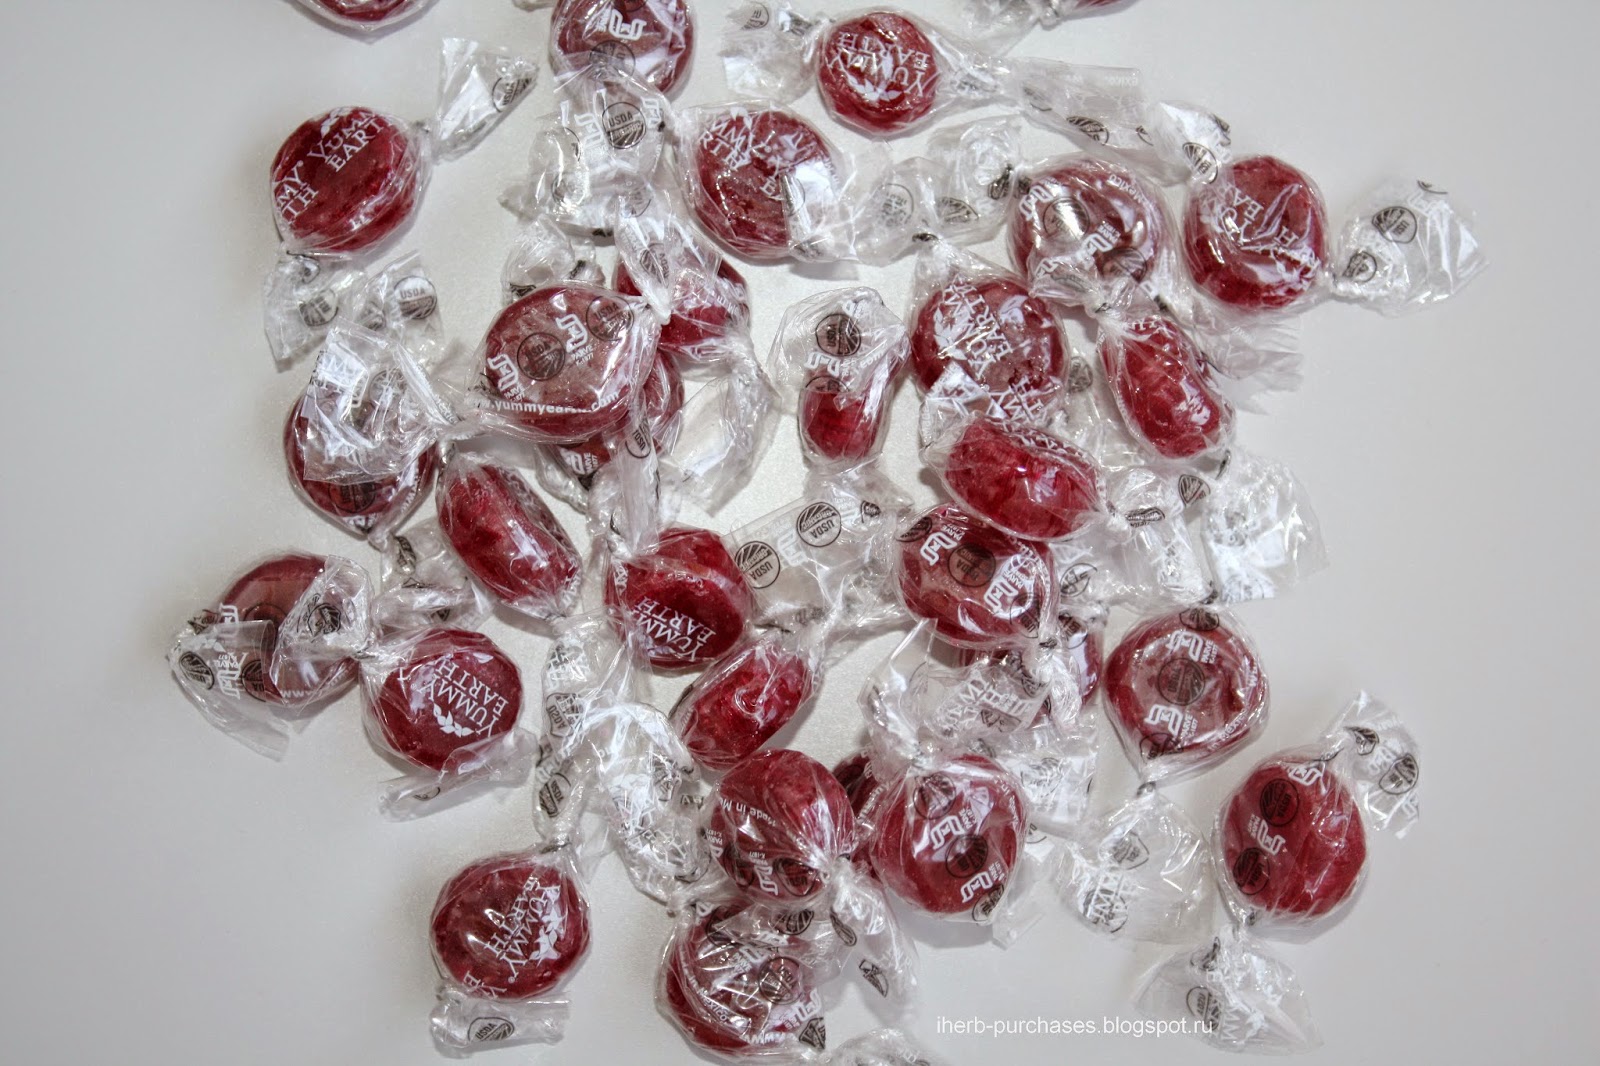 Yummy Earth, Organic Candy Drops, Pomegranate Pucker, 3.3 oz (93.5 g)